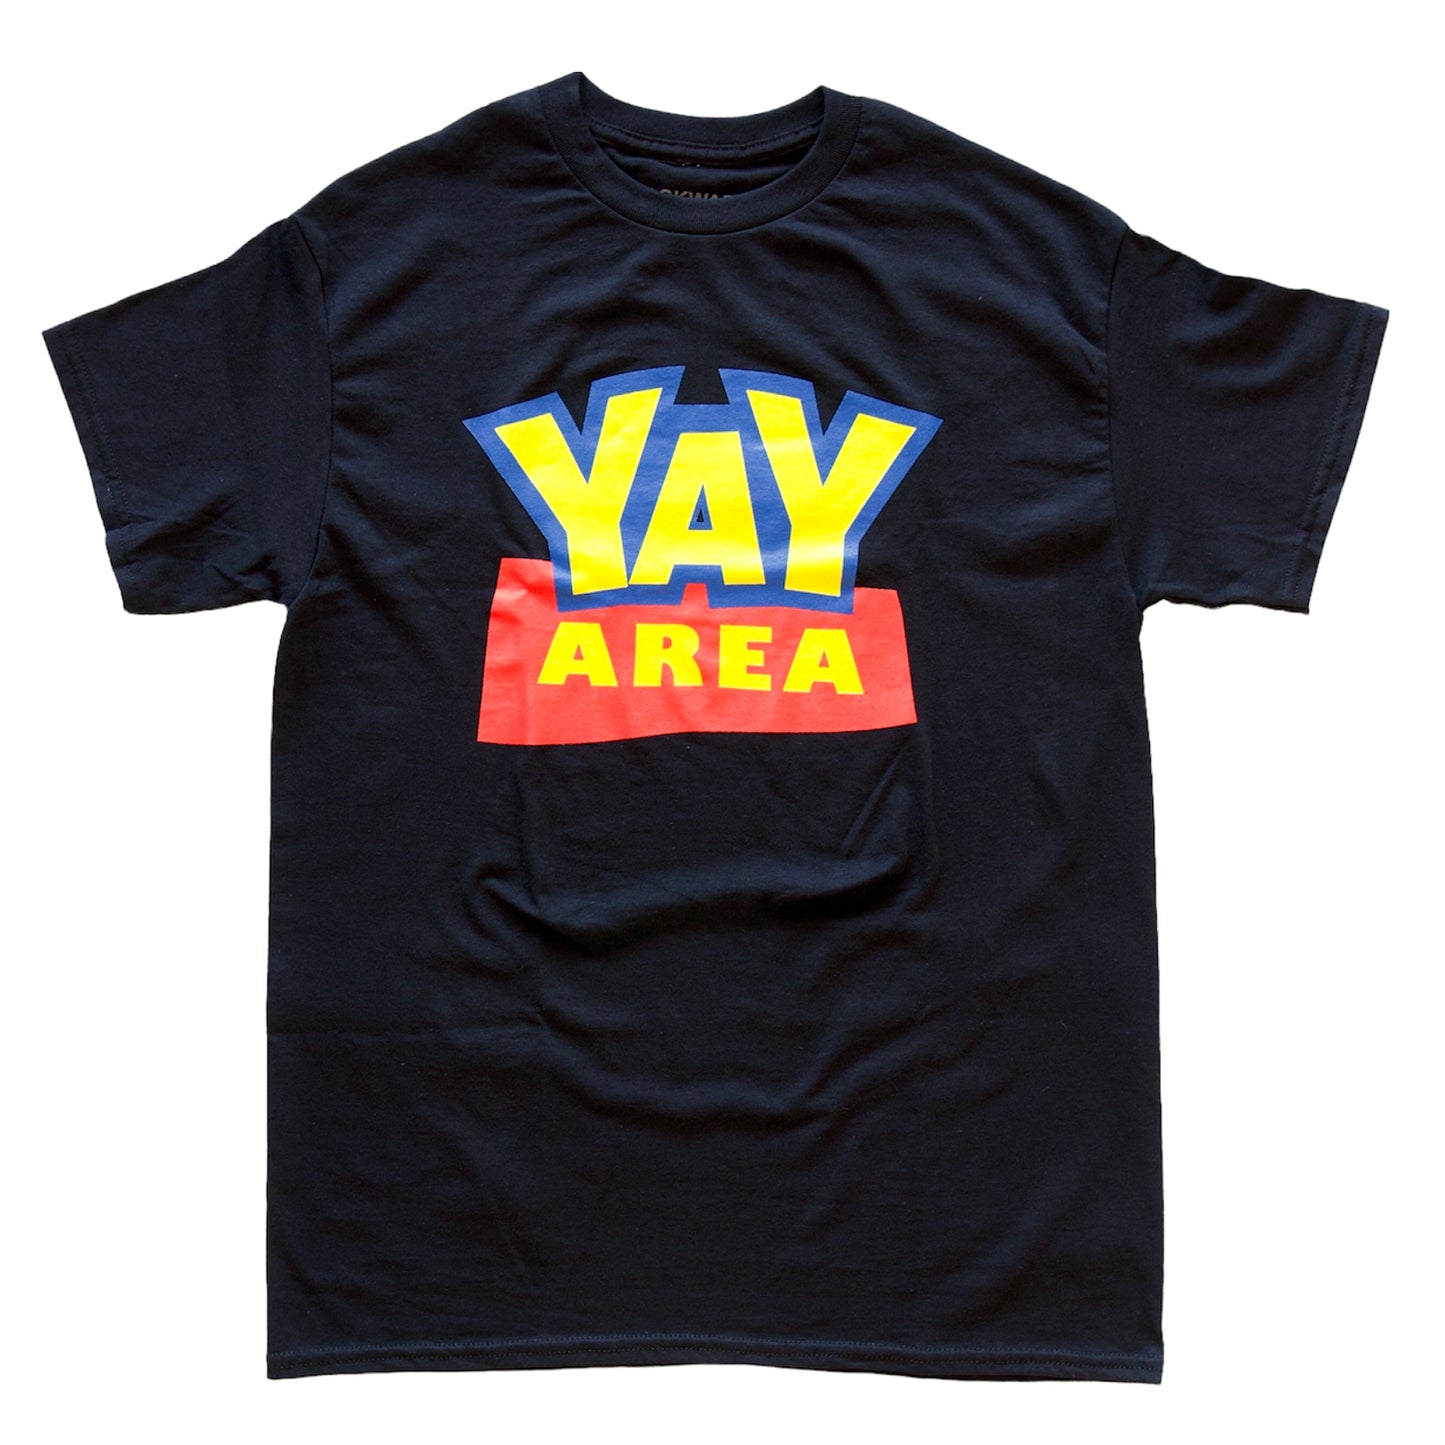 Black “Toy Story Yay Area” T-Shirt